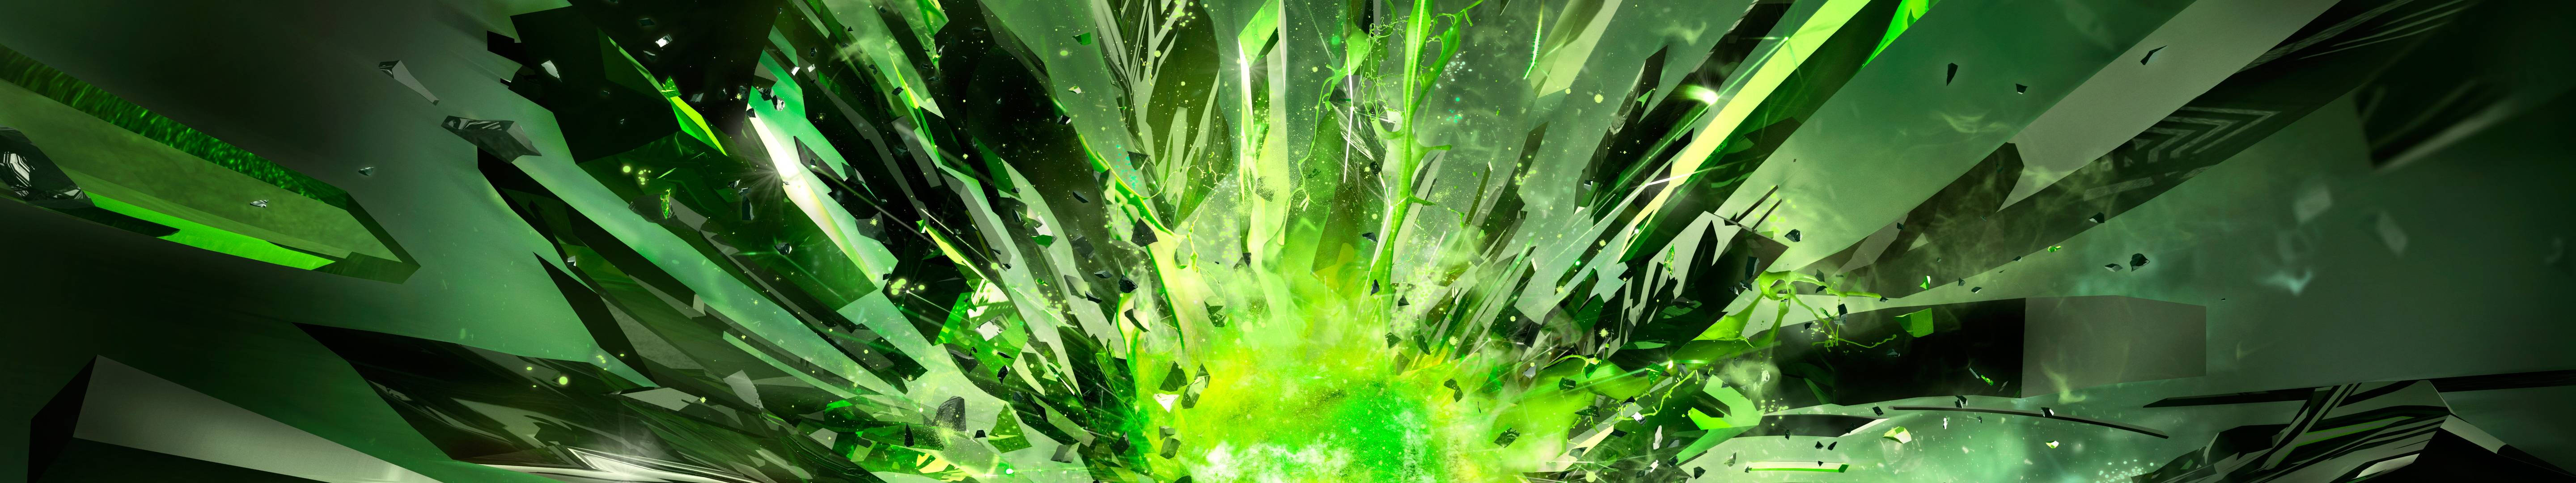 Green Crystals Explosion